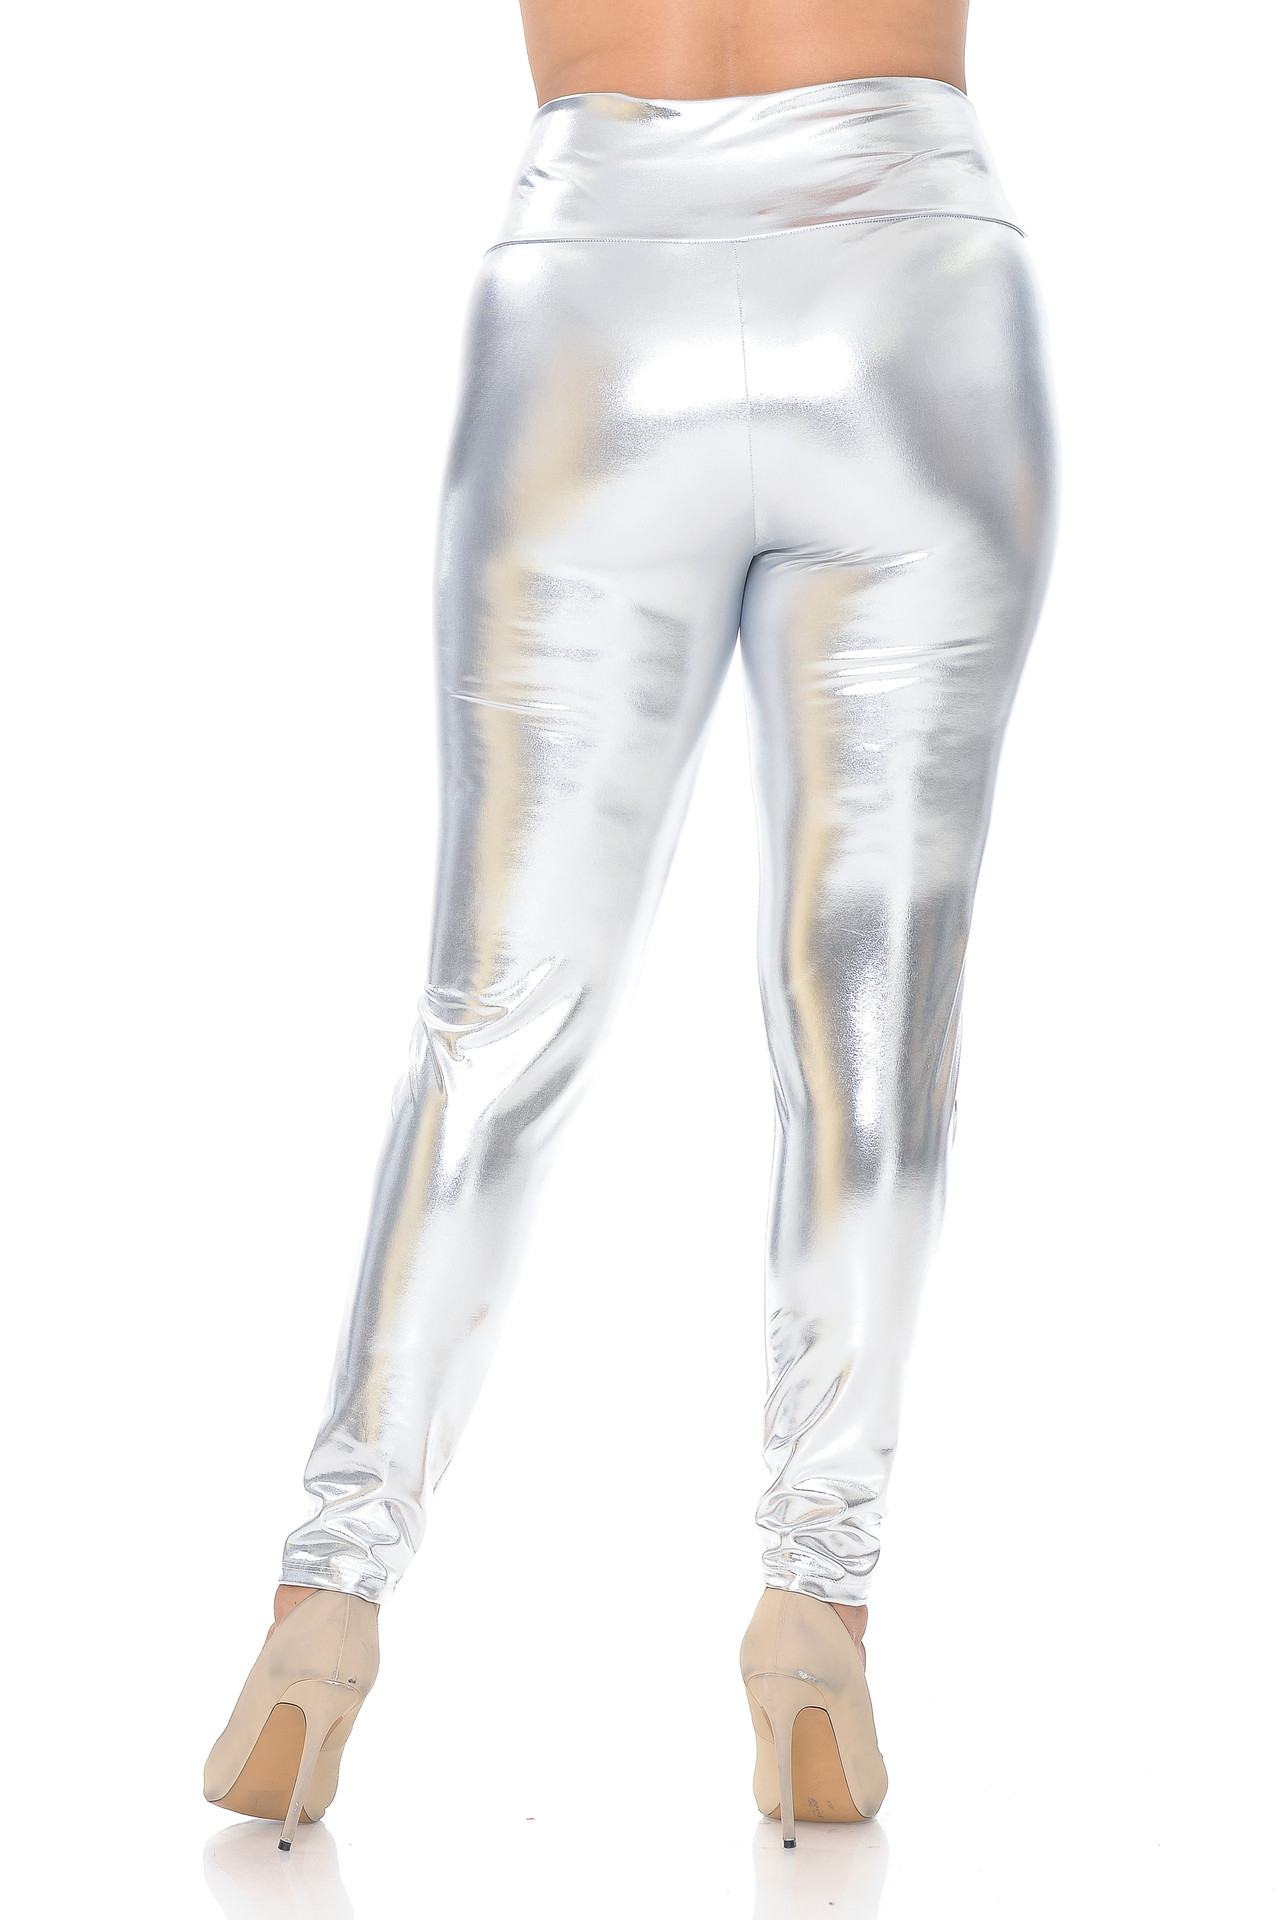 Tek Gear Multi Color Silver Leggings Size 3X (Plus) - 47% off